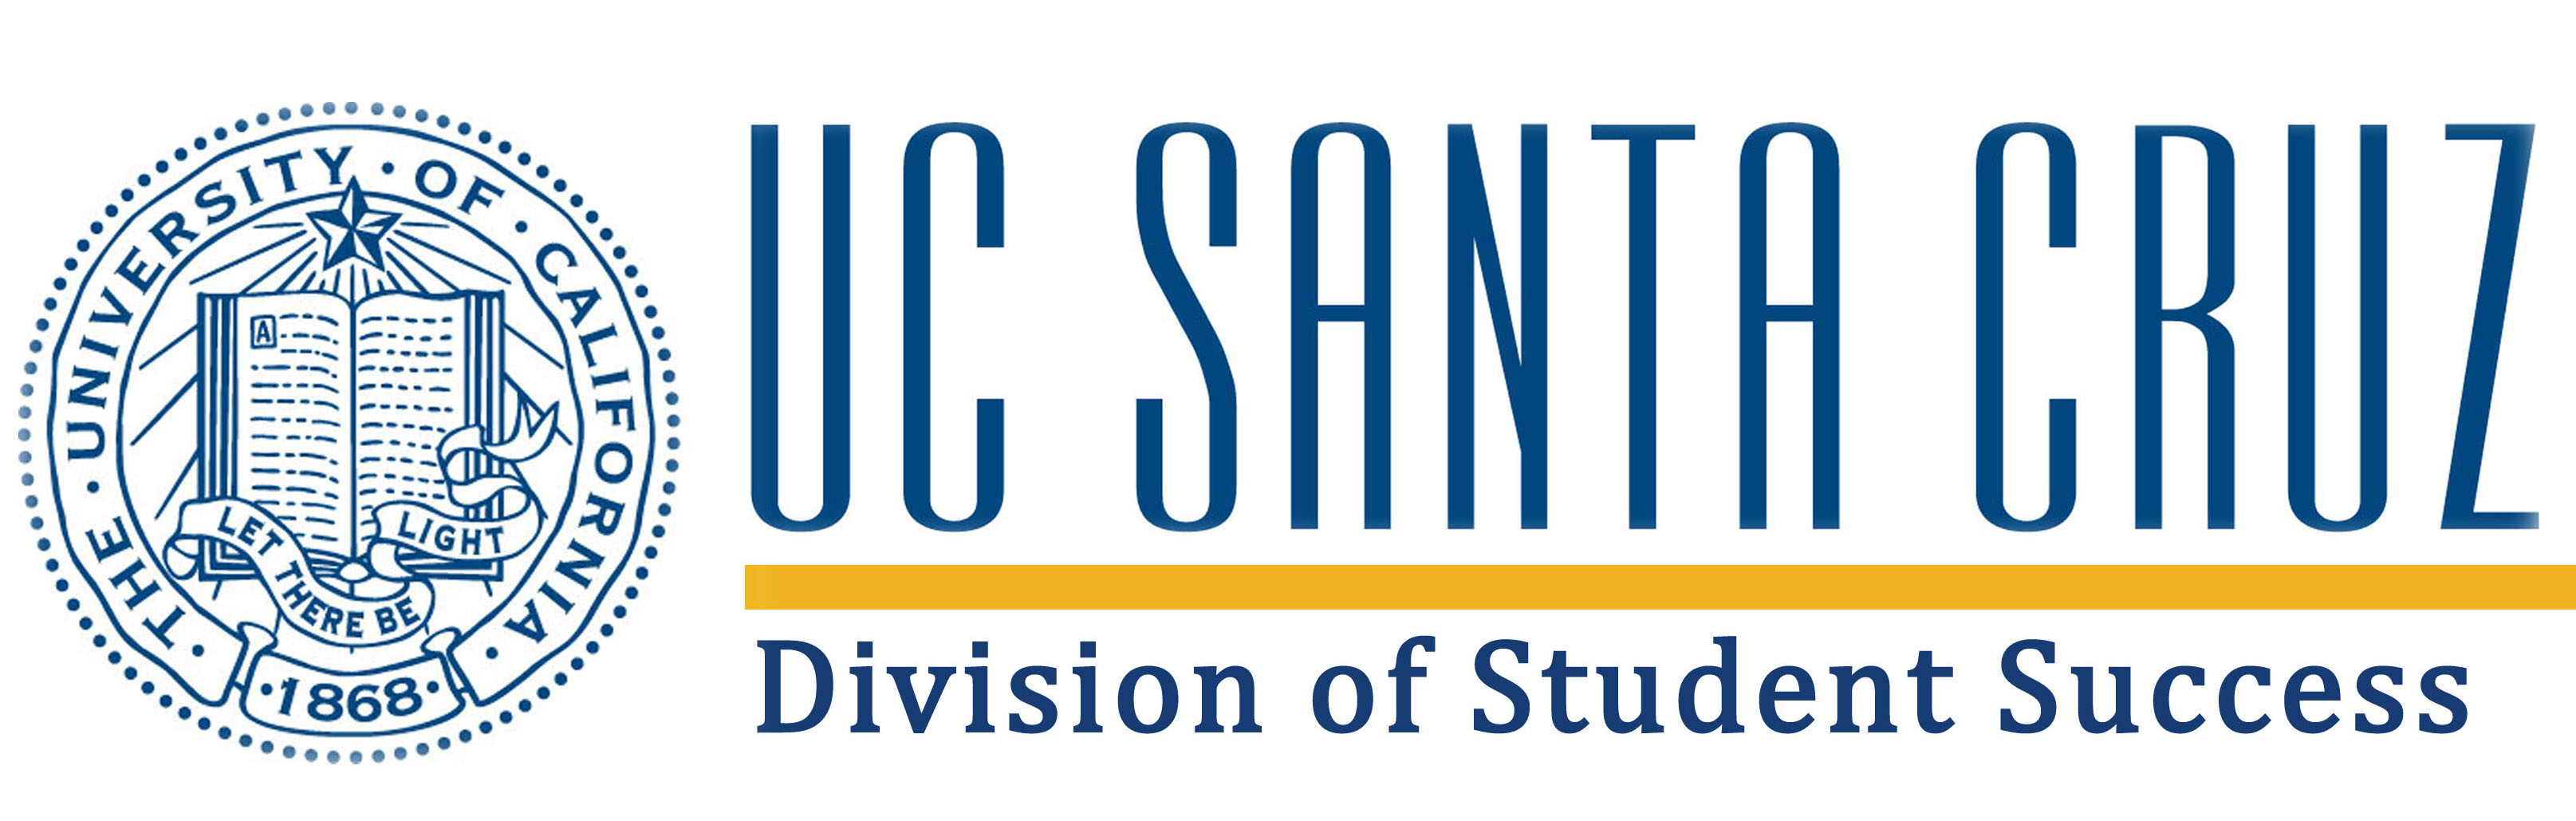 division-student-success-logo.jpg